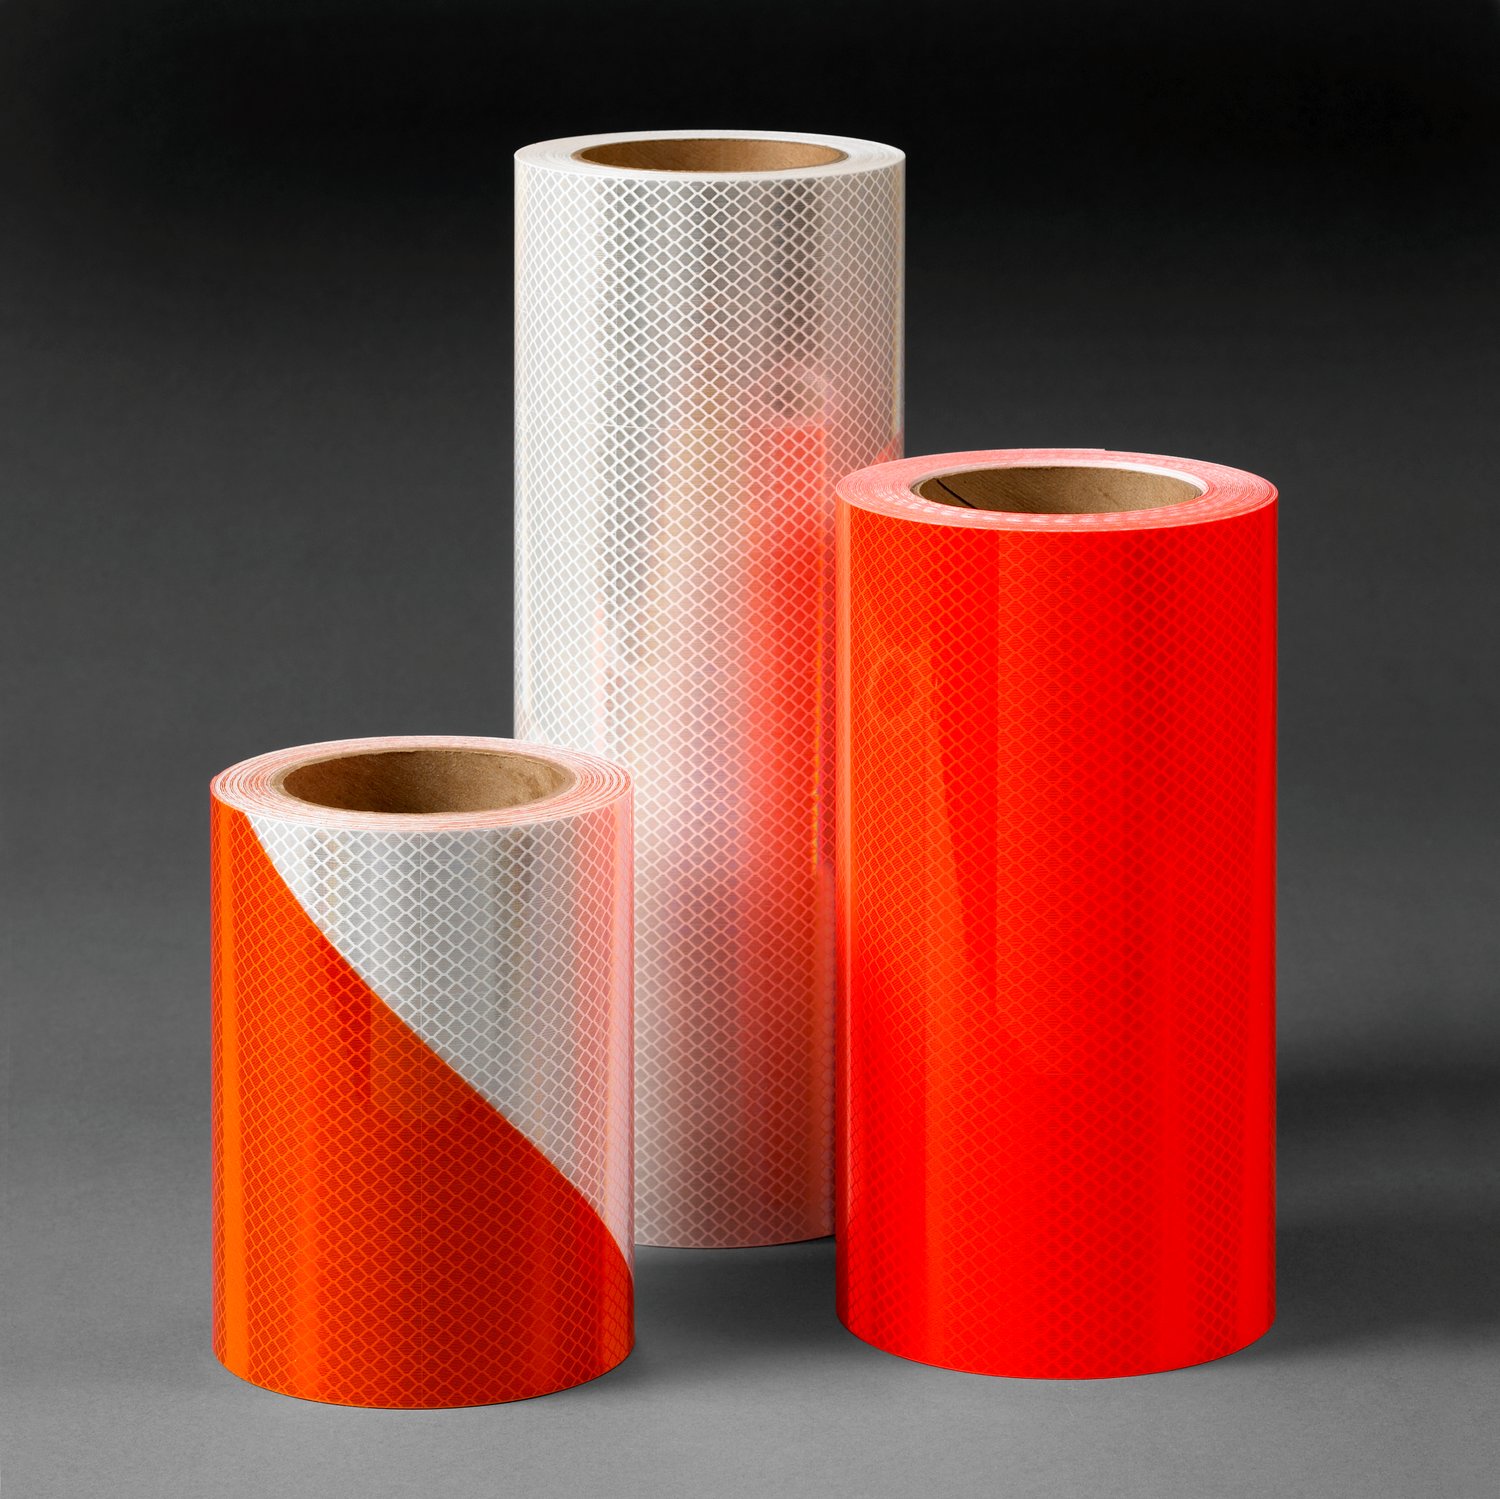 7010389120 - 3M Diamond Grade DG³ Pre-Striped Barricade Sheeting Series 444L,
Orange/White, 4 in Left, 12 in x 50 yd